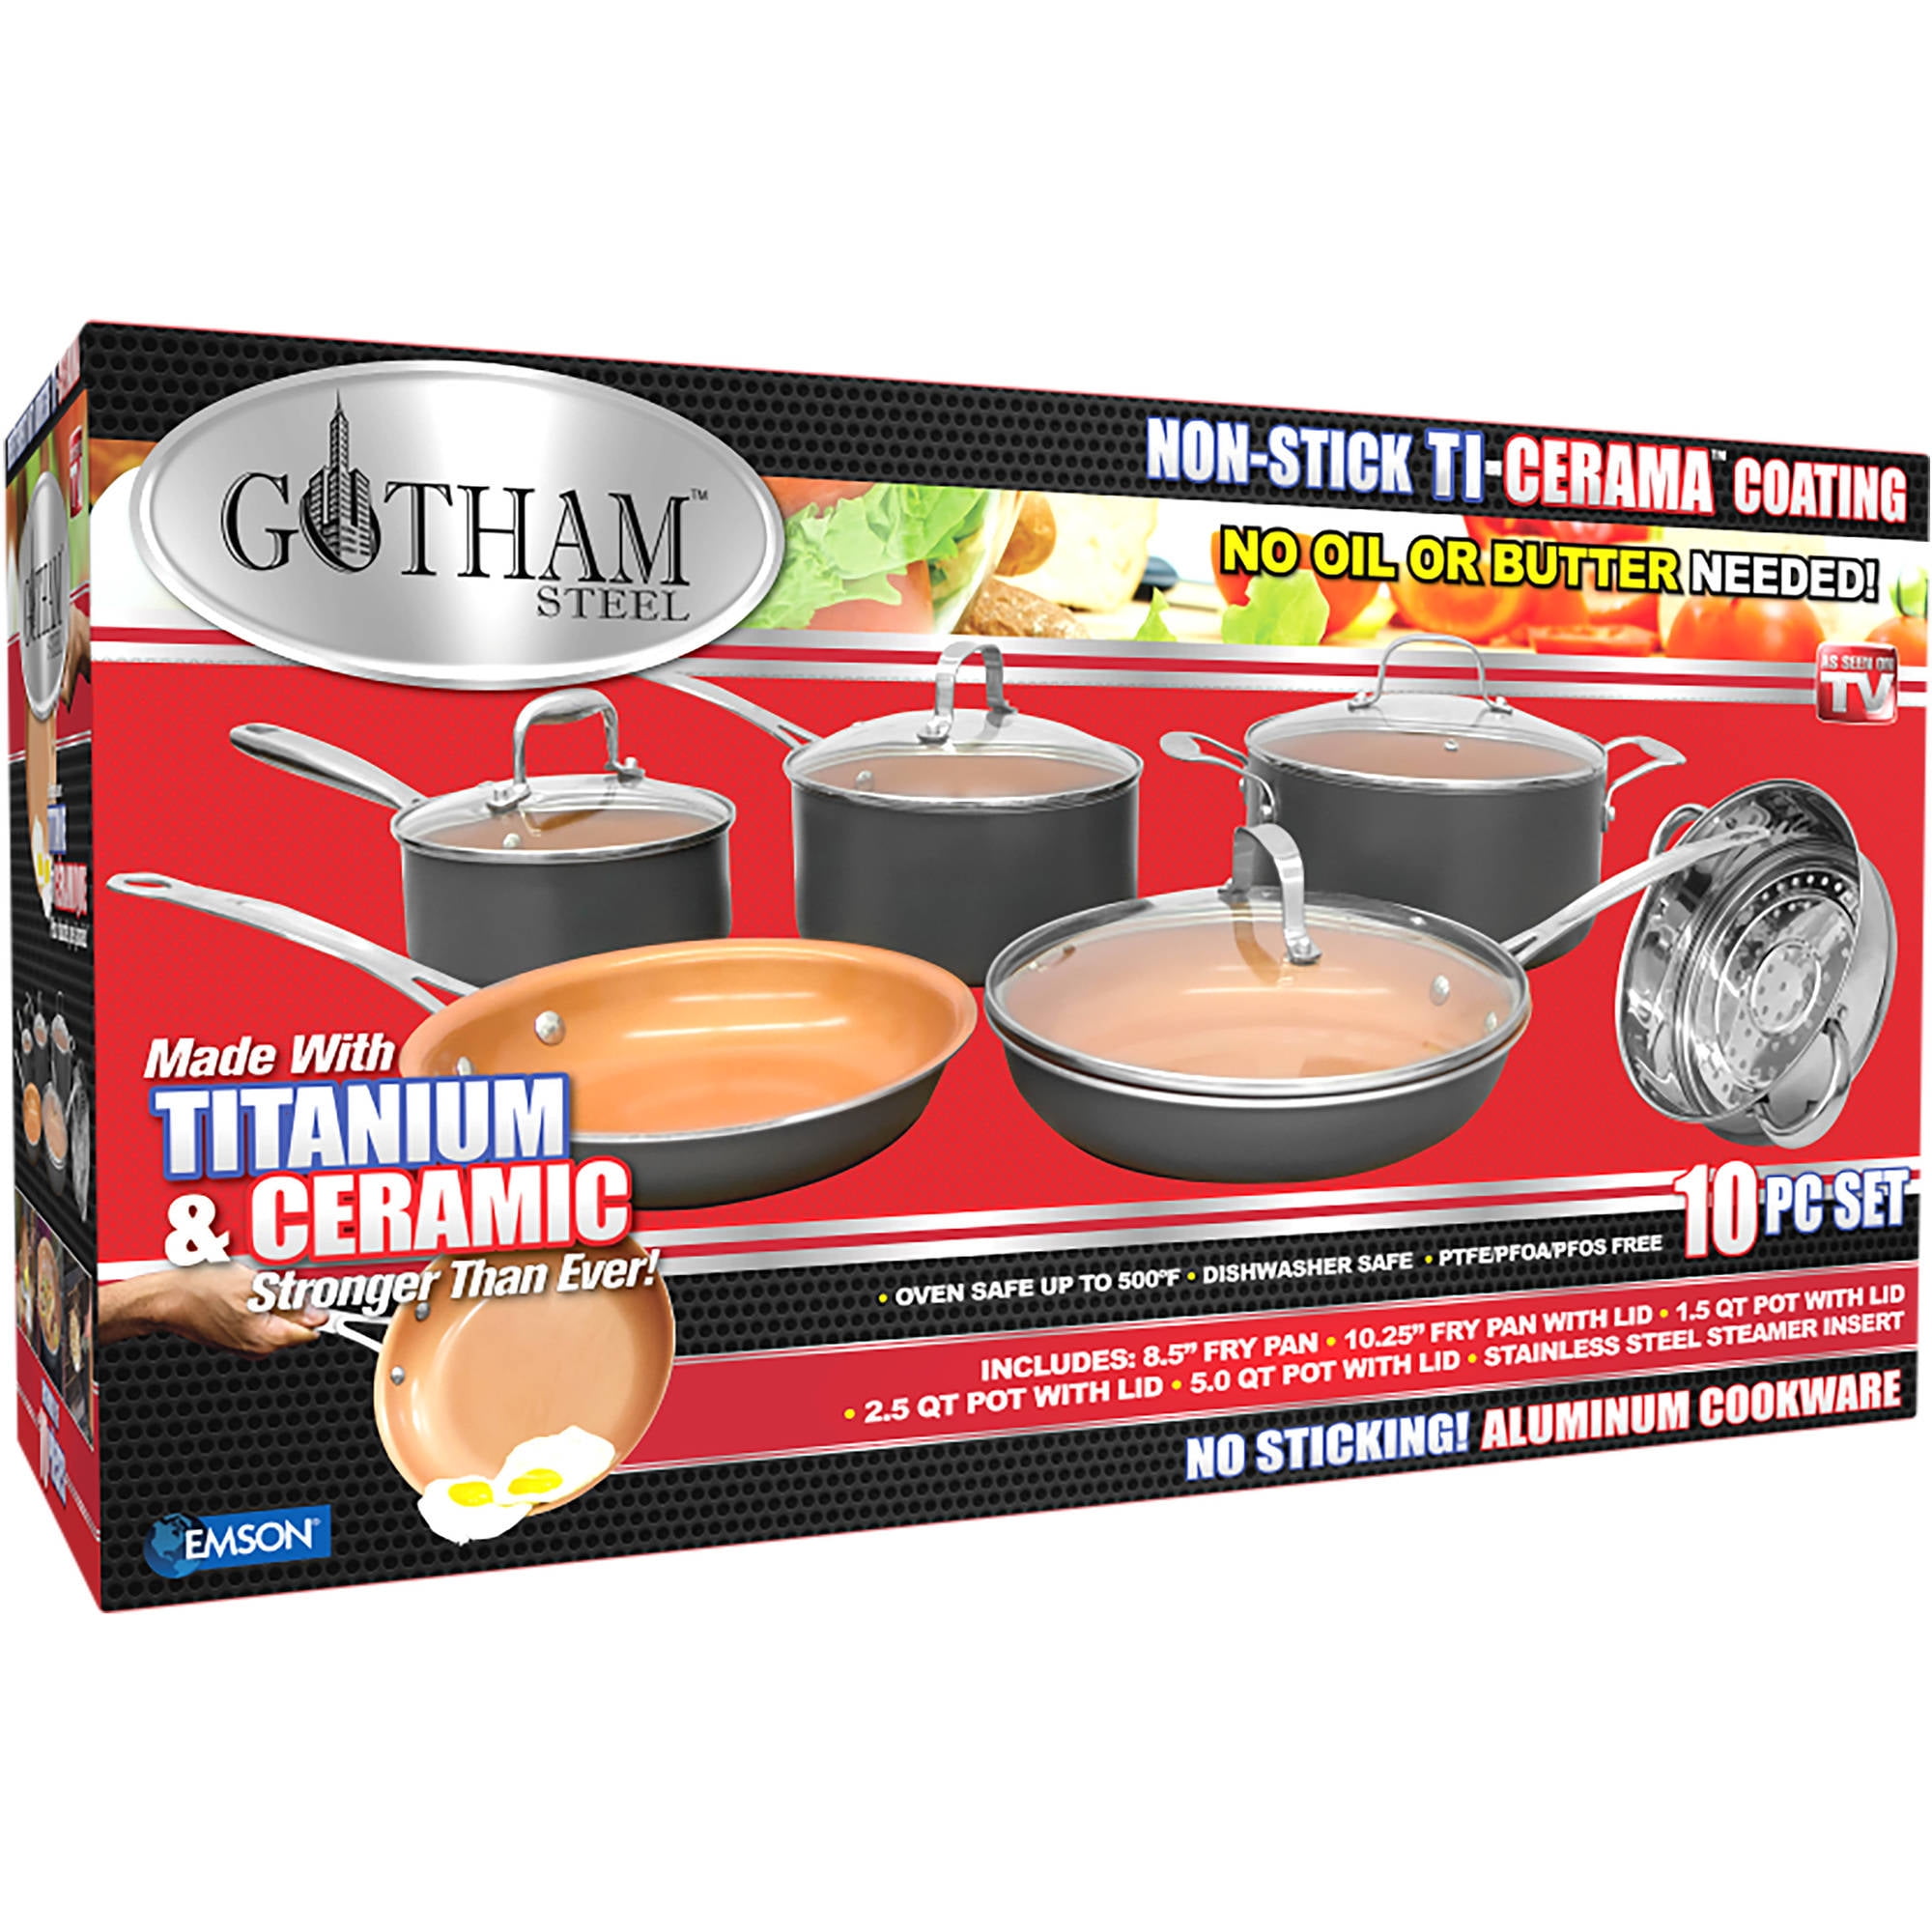 Gotham Steel 10-Piece Ti-Ceramic Nonstick Coating Cookware Set with Utensils